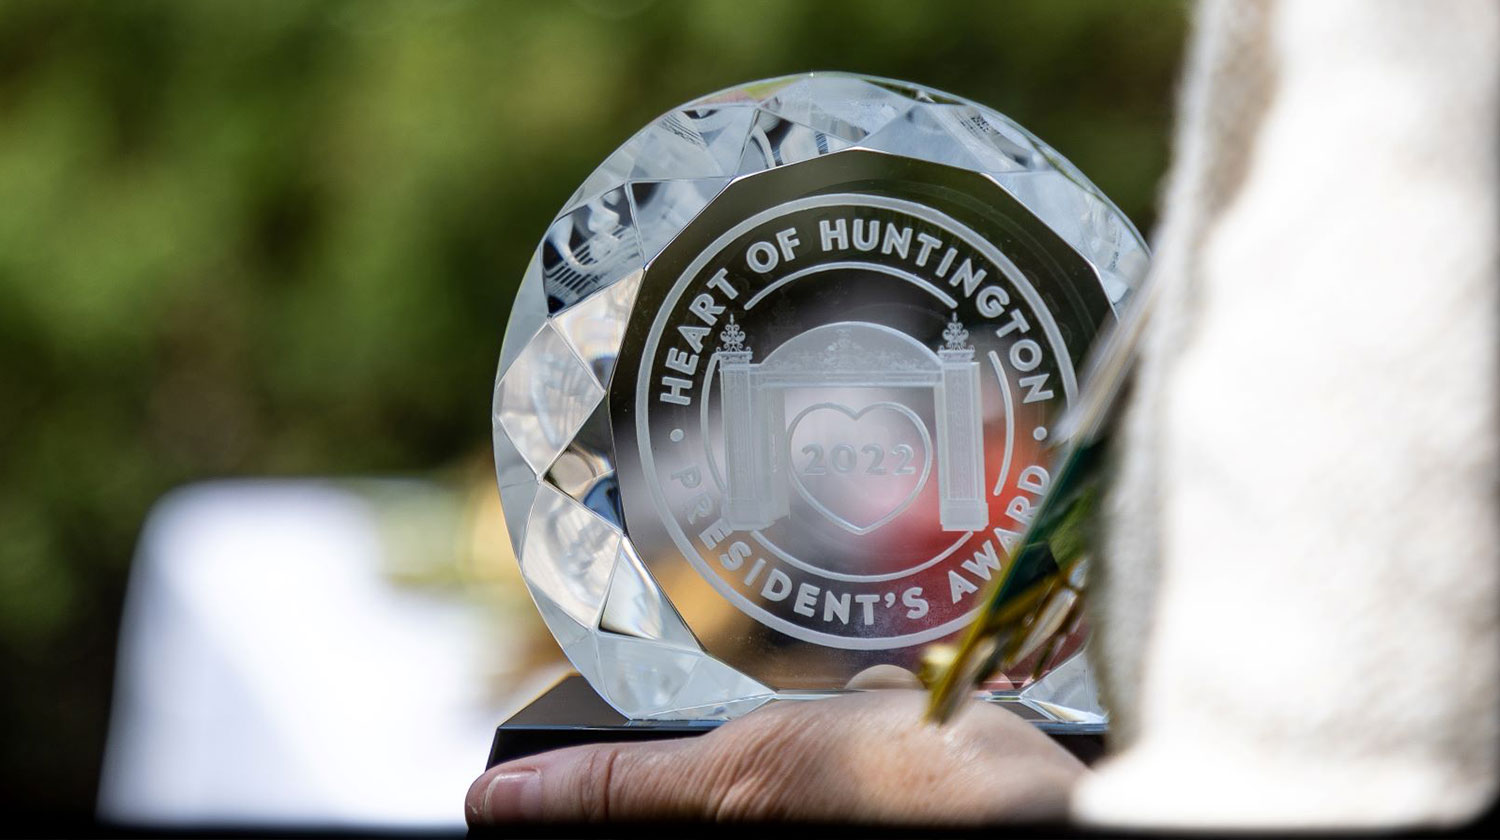 Huntington Health Presents Heart of Huntington Award